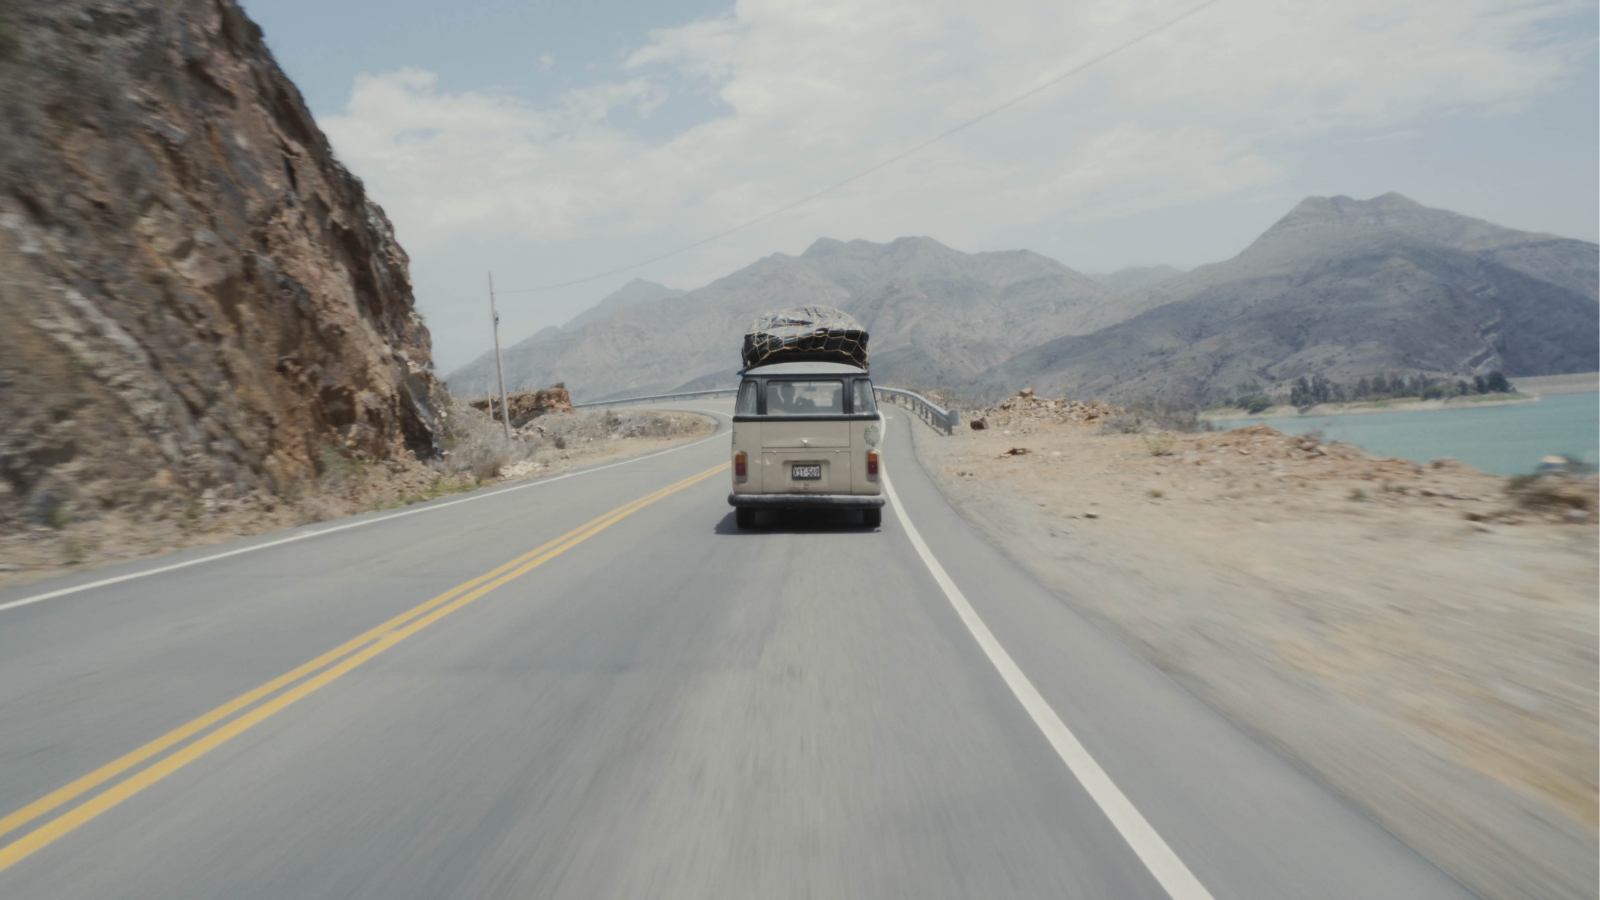 Campervan travelling along dusty road